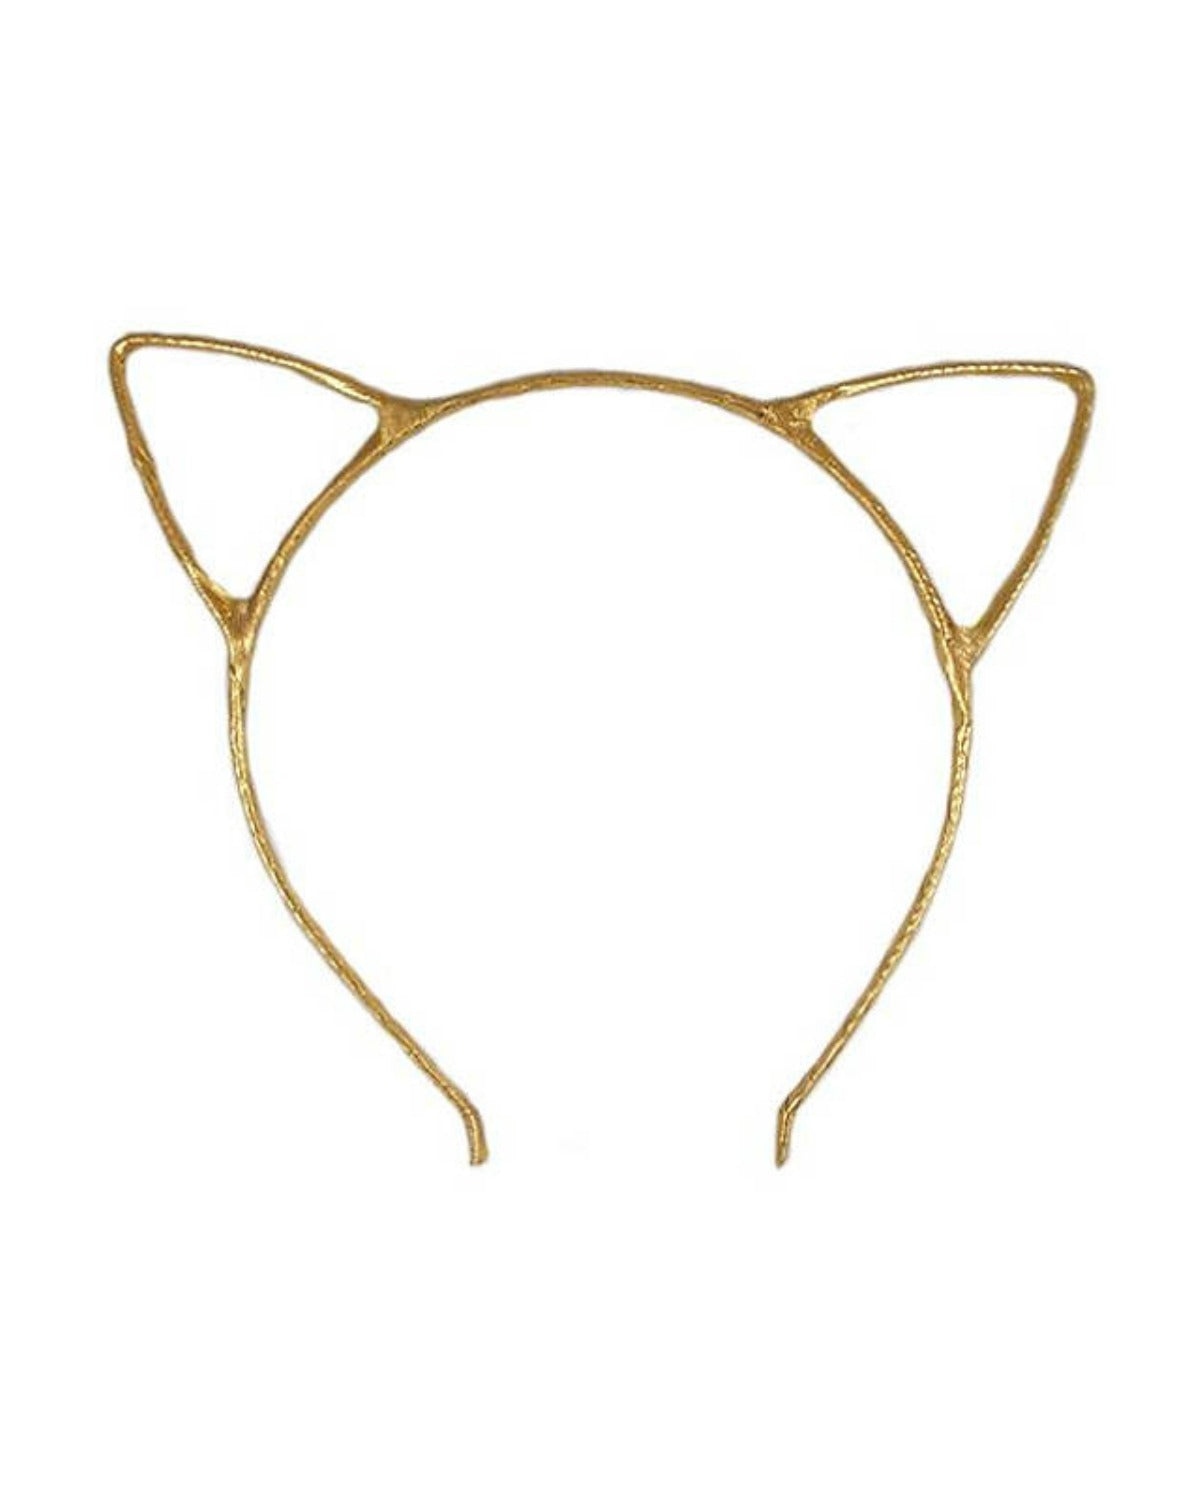 gold kitty ears headband cat costume